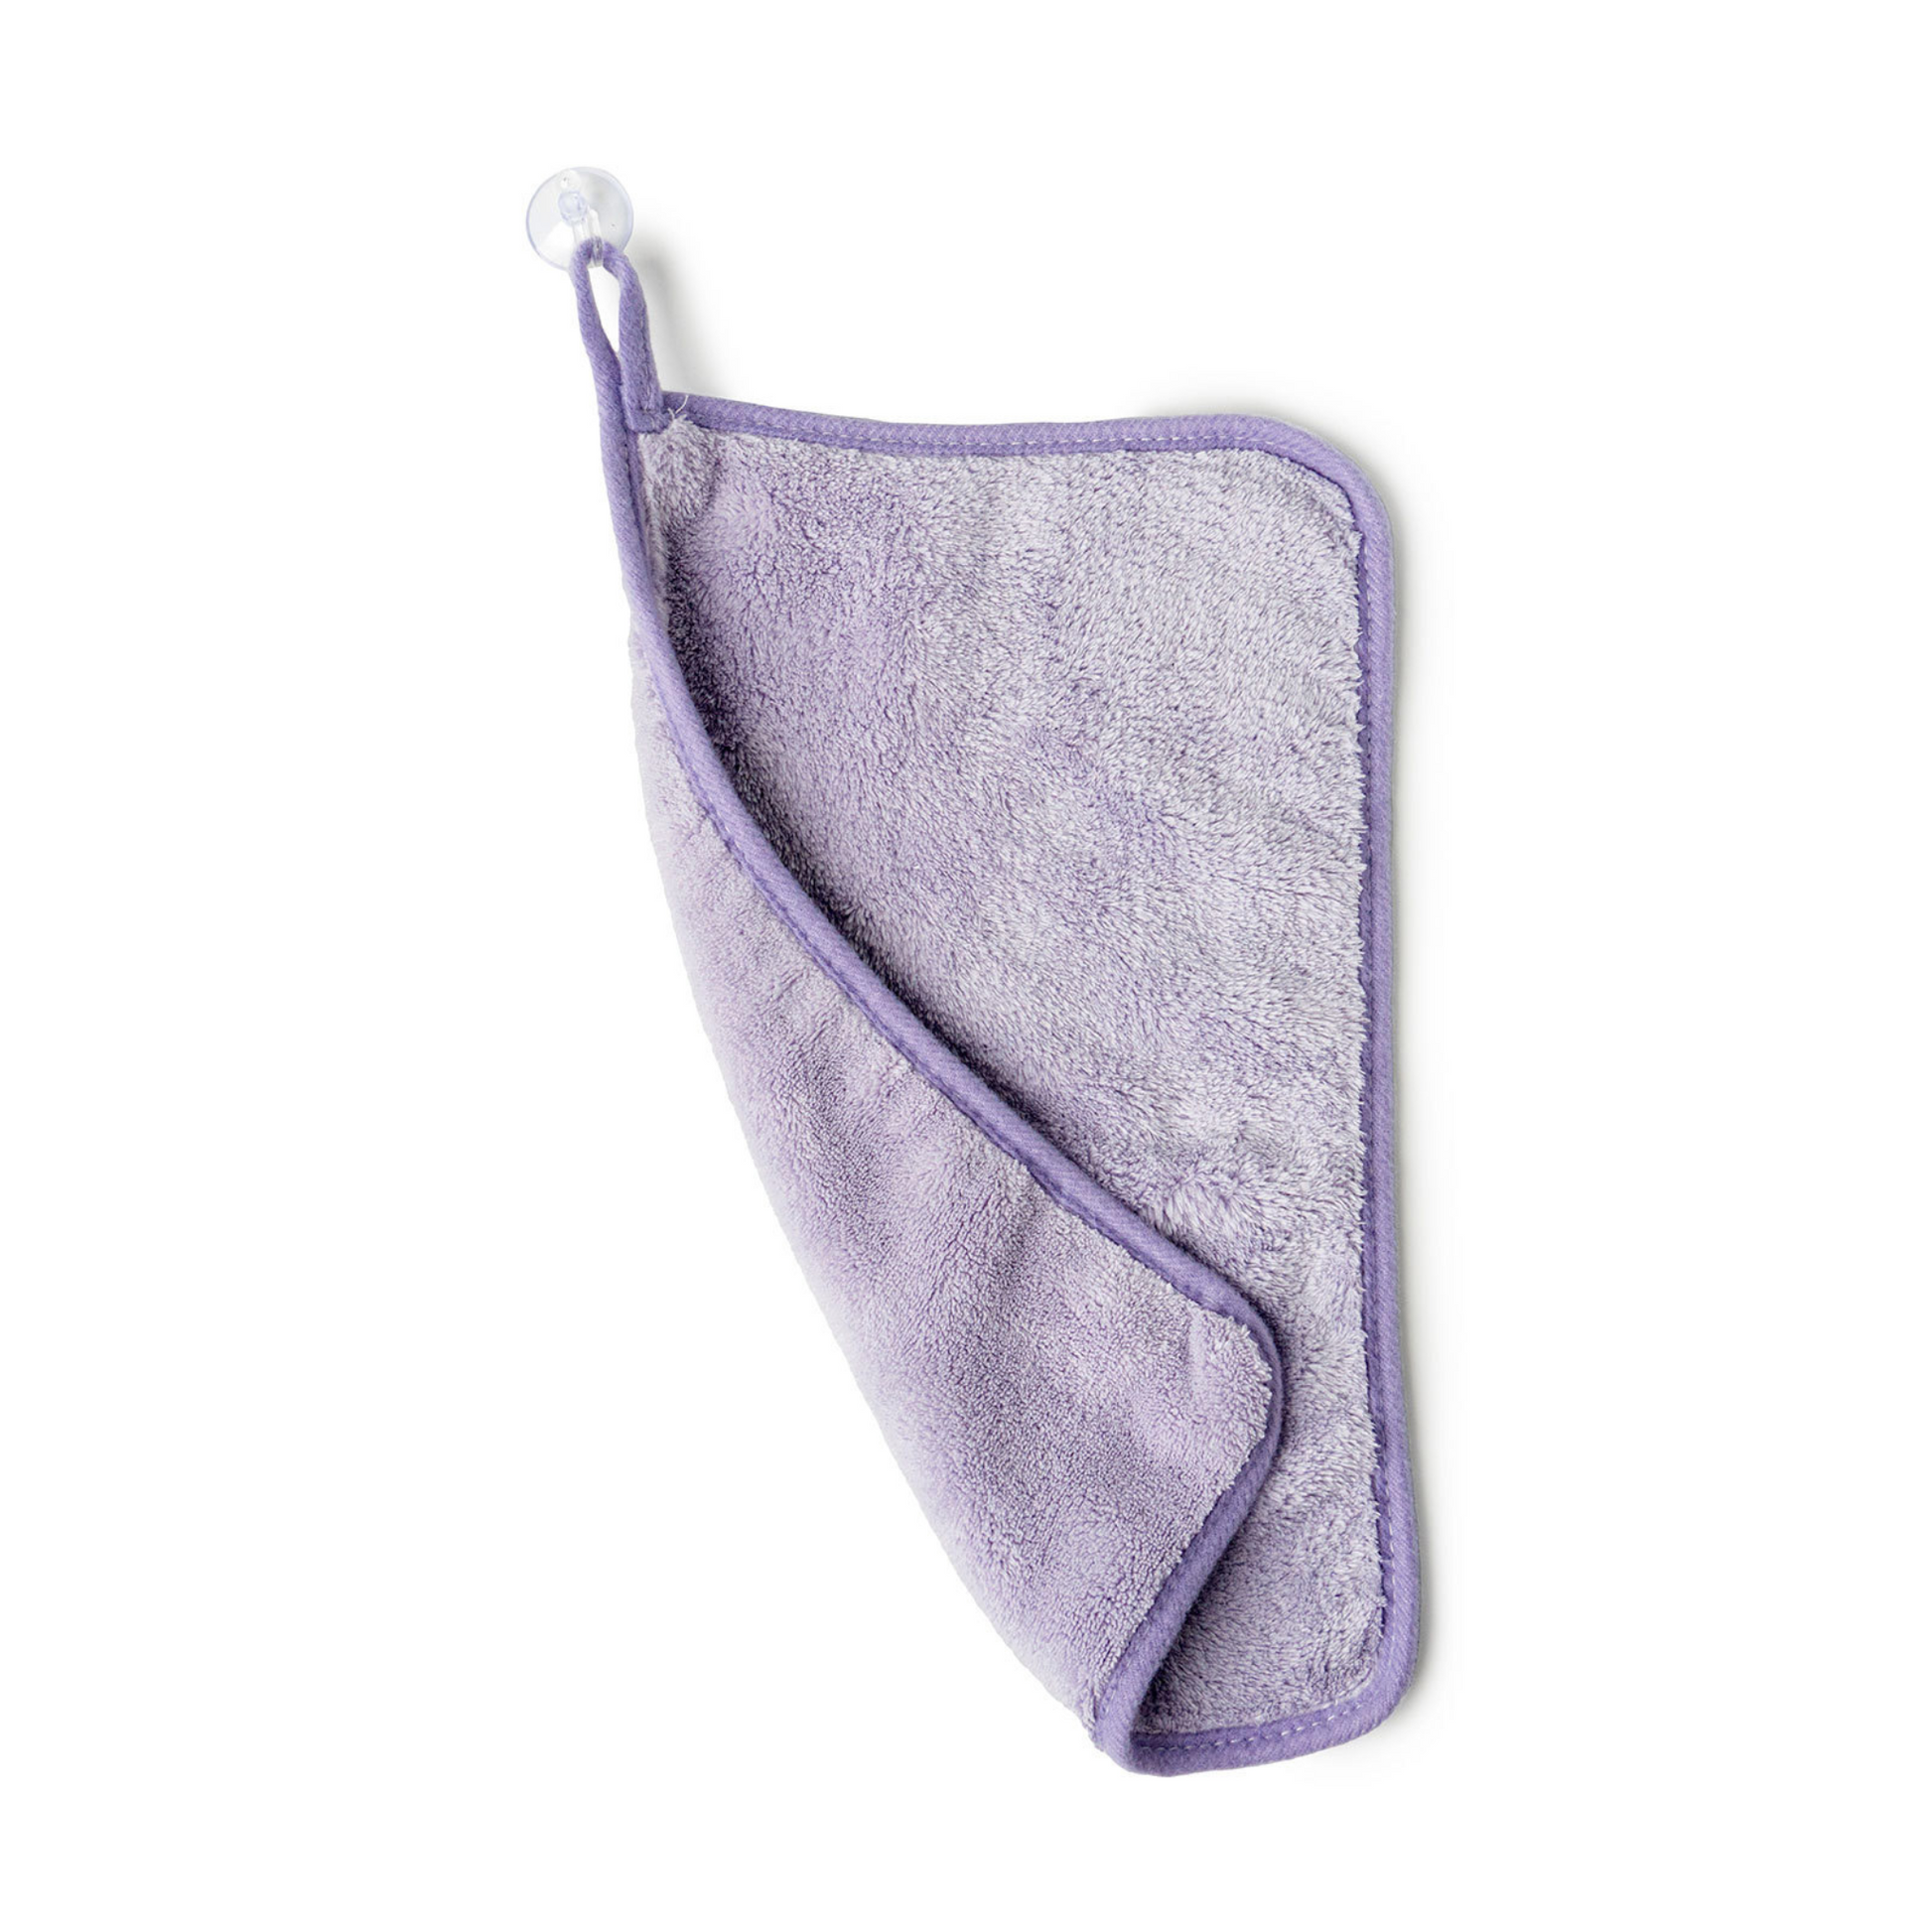 Water Works makeup removing towel in purple